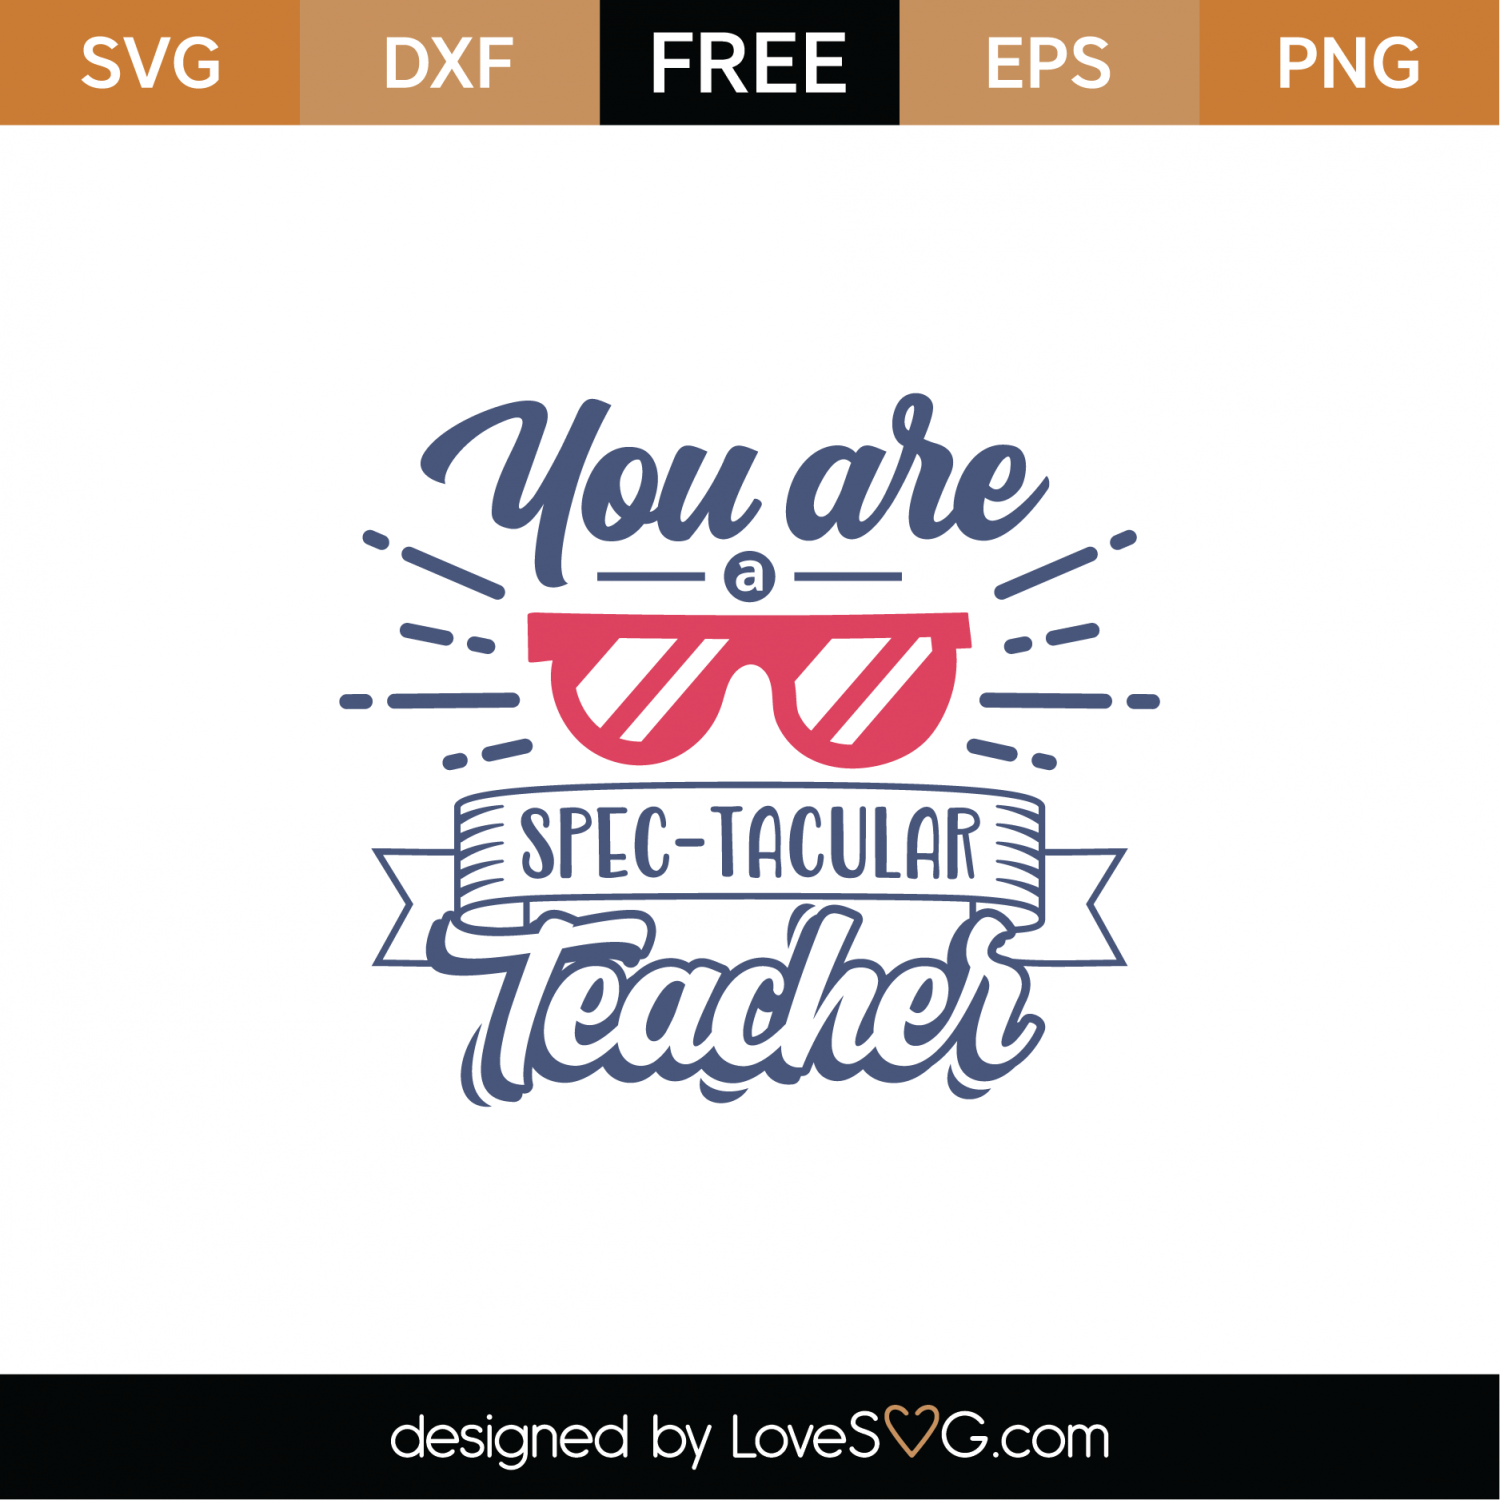 Download Free You Are Spectacular Teacher SVG Cut File | Lovesvg.com